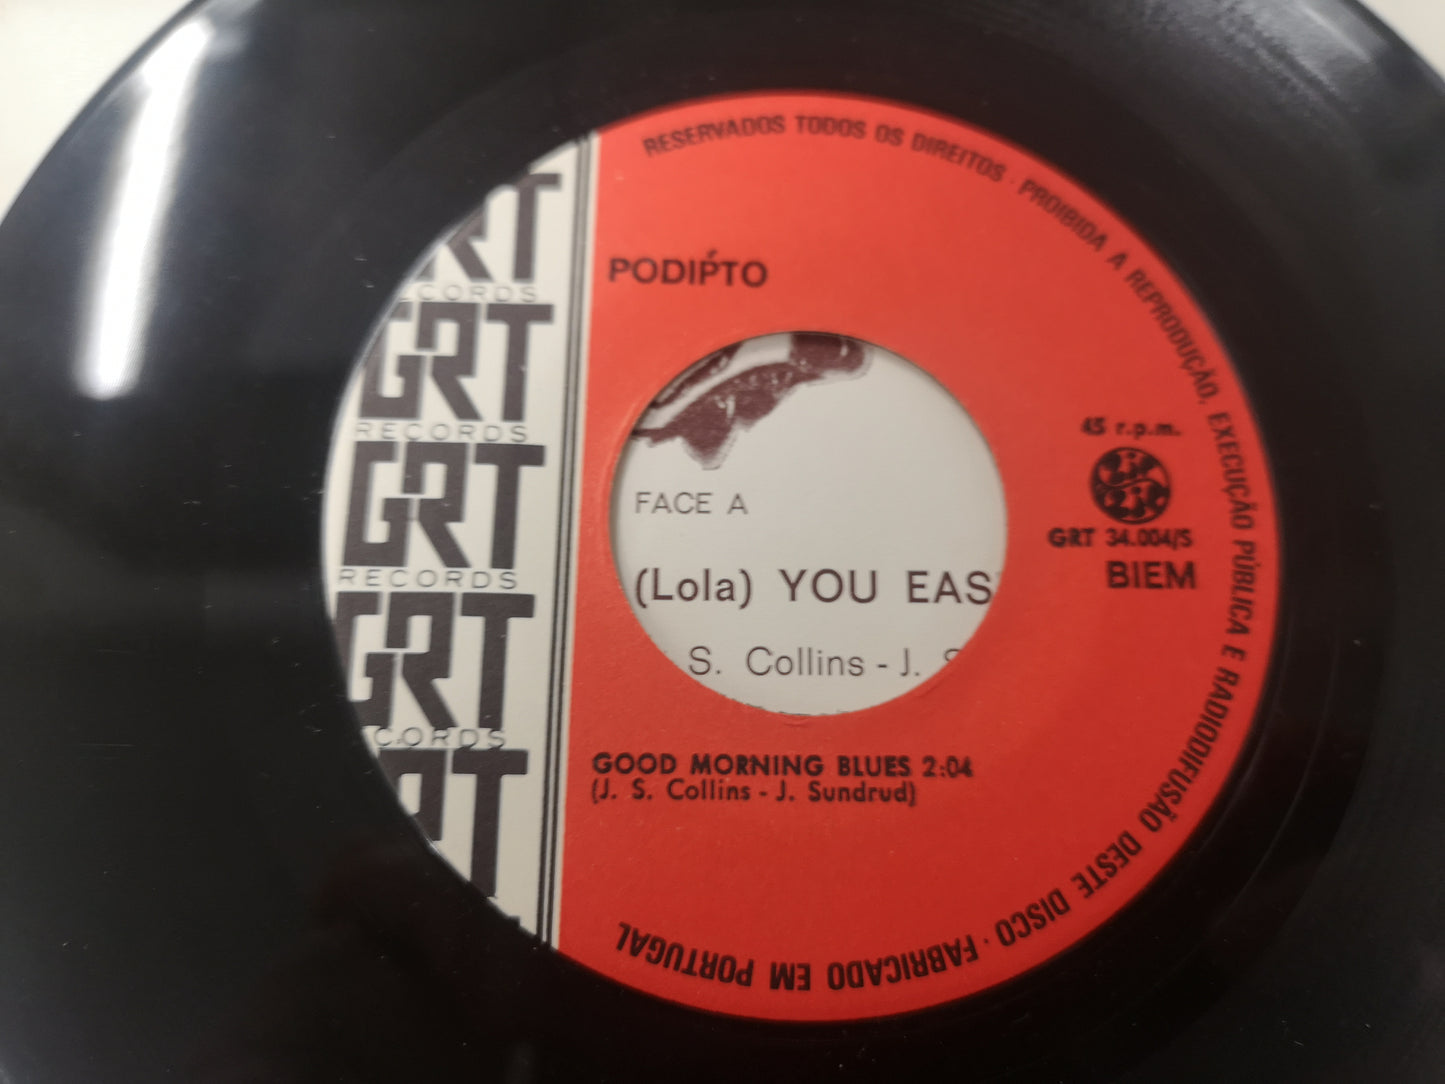 Podipto "(Lola) You Ease My Achin' Heart" Orig Portugal 1970 VG++/VG++ (7" Single)